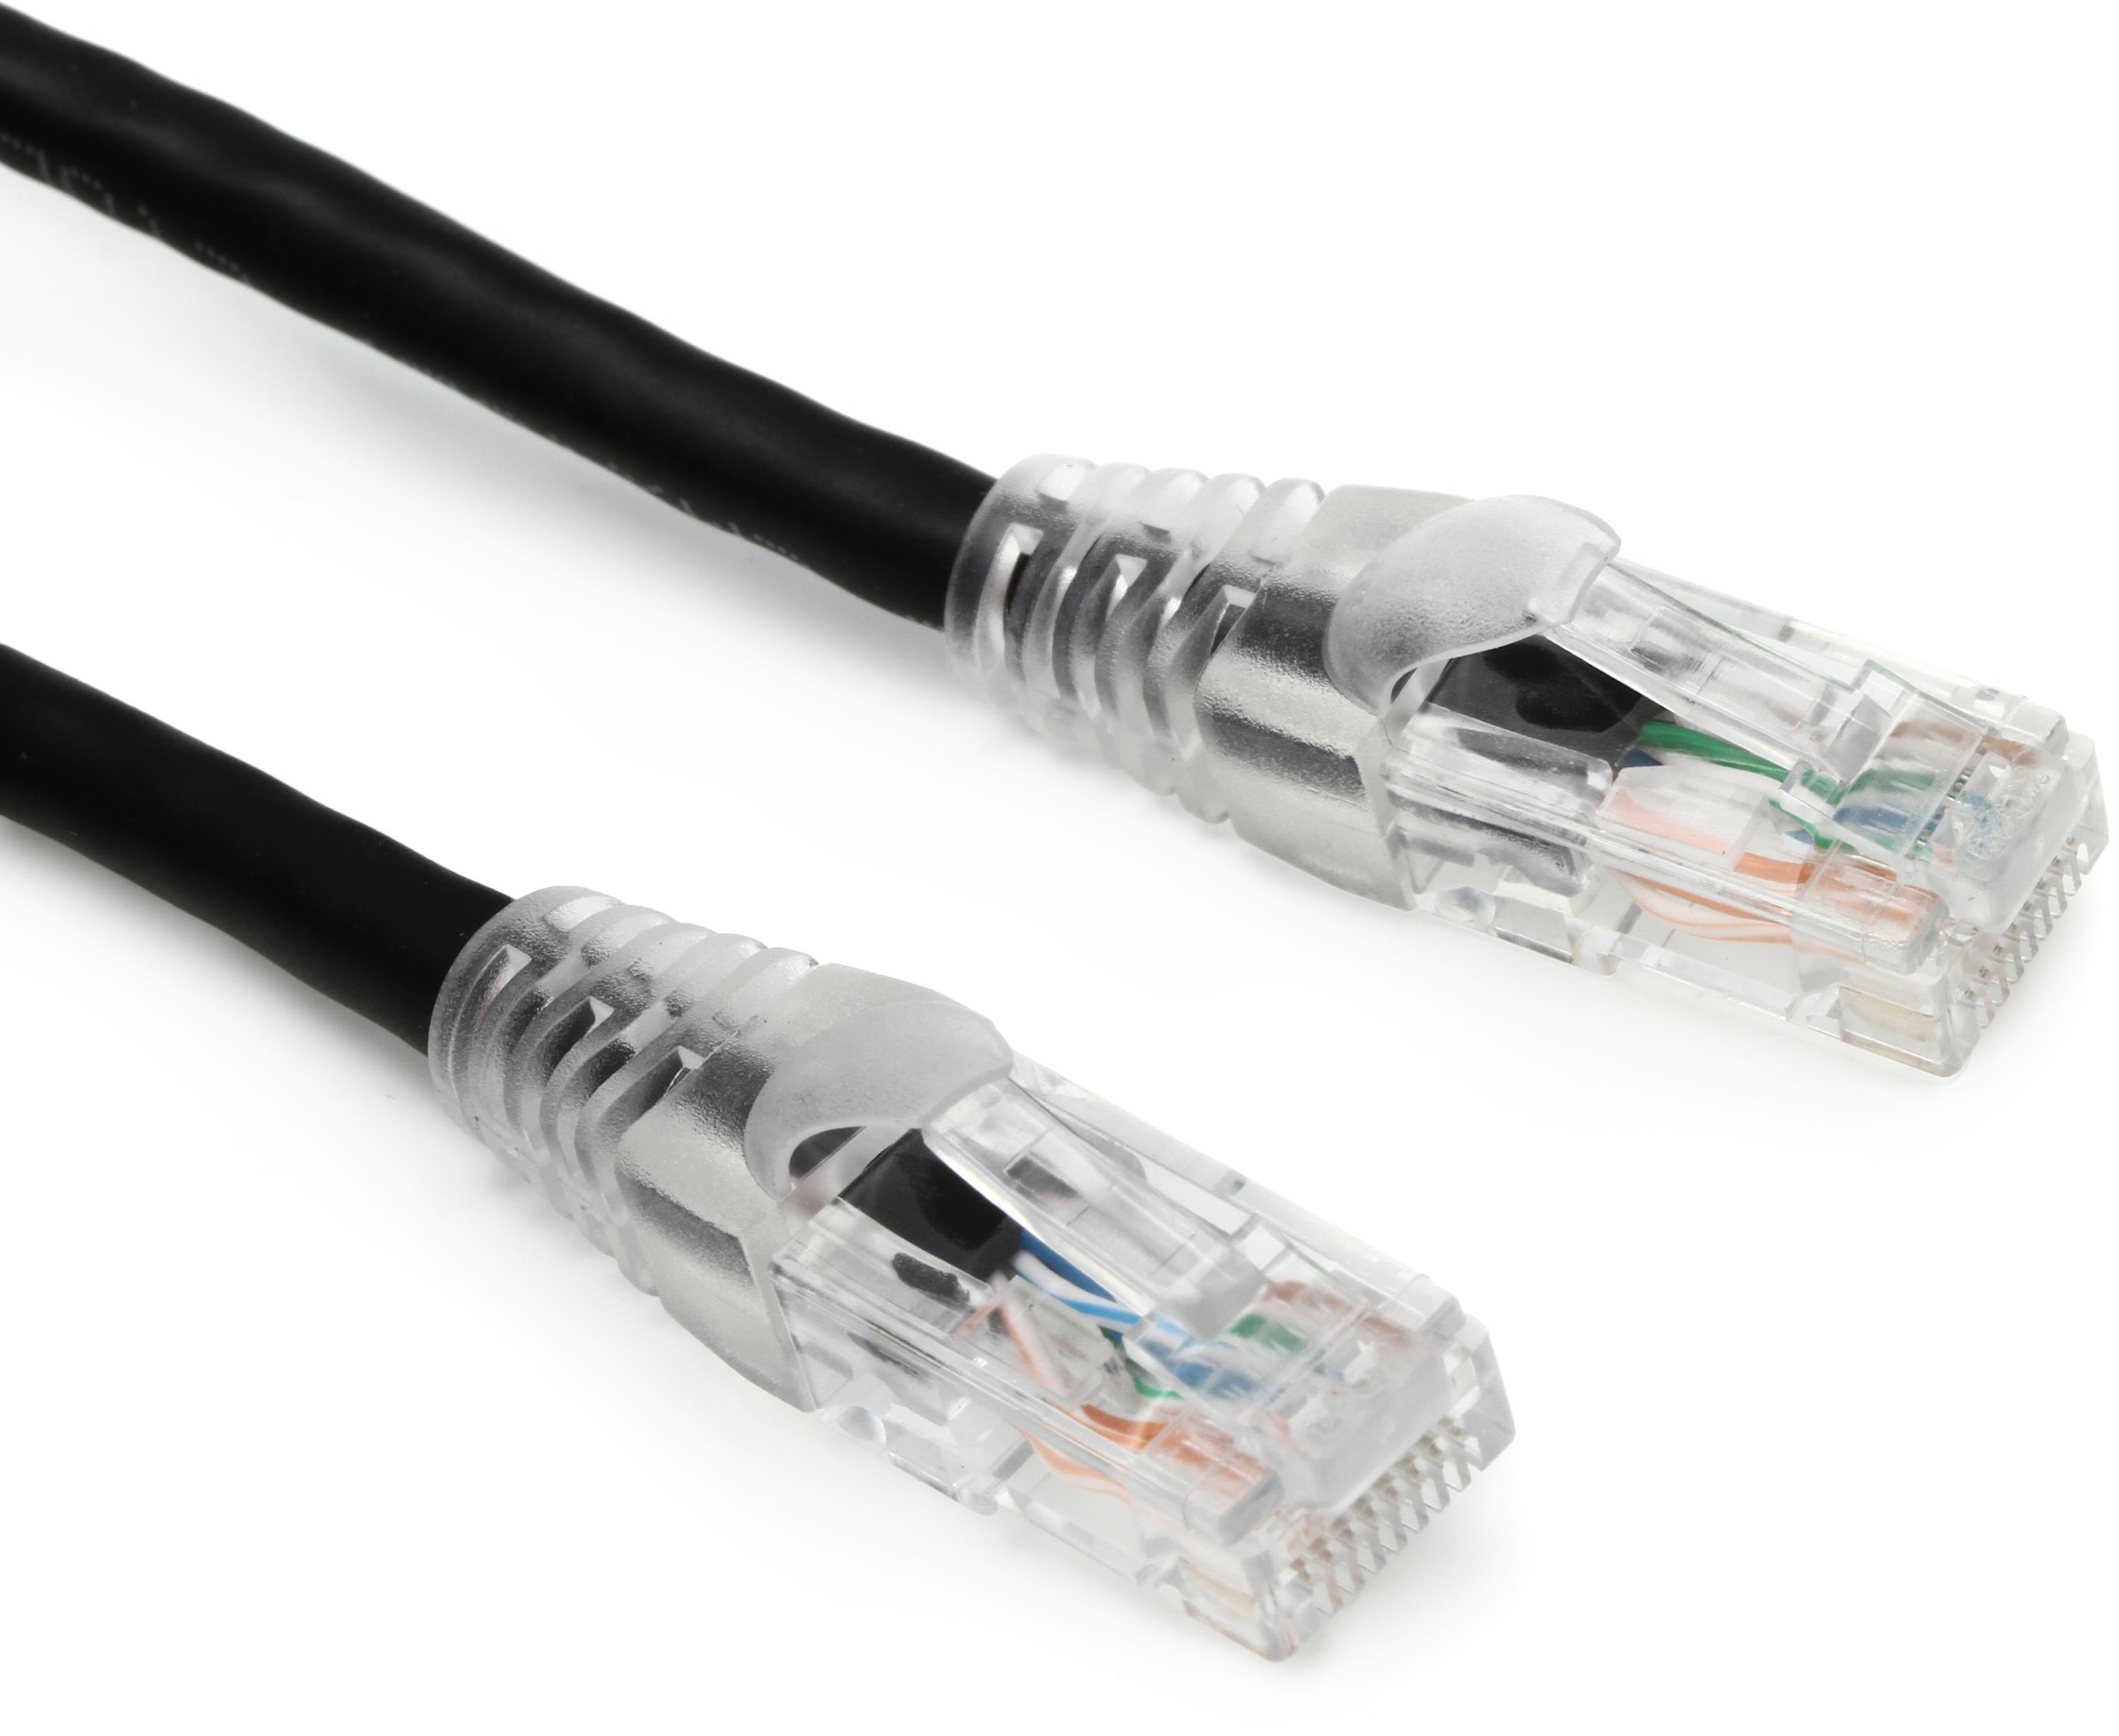 Bundled Item: Pro Co CC6.K.005F Cat 6 Ethernet Cable - 5 foot Black